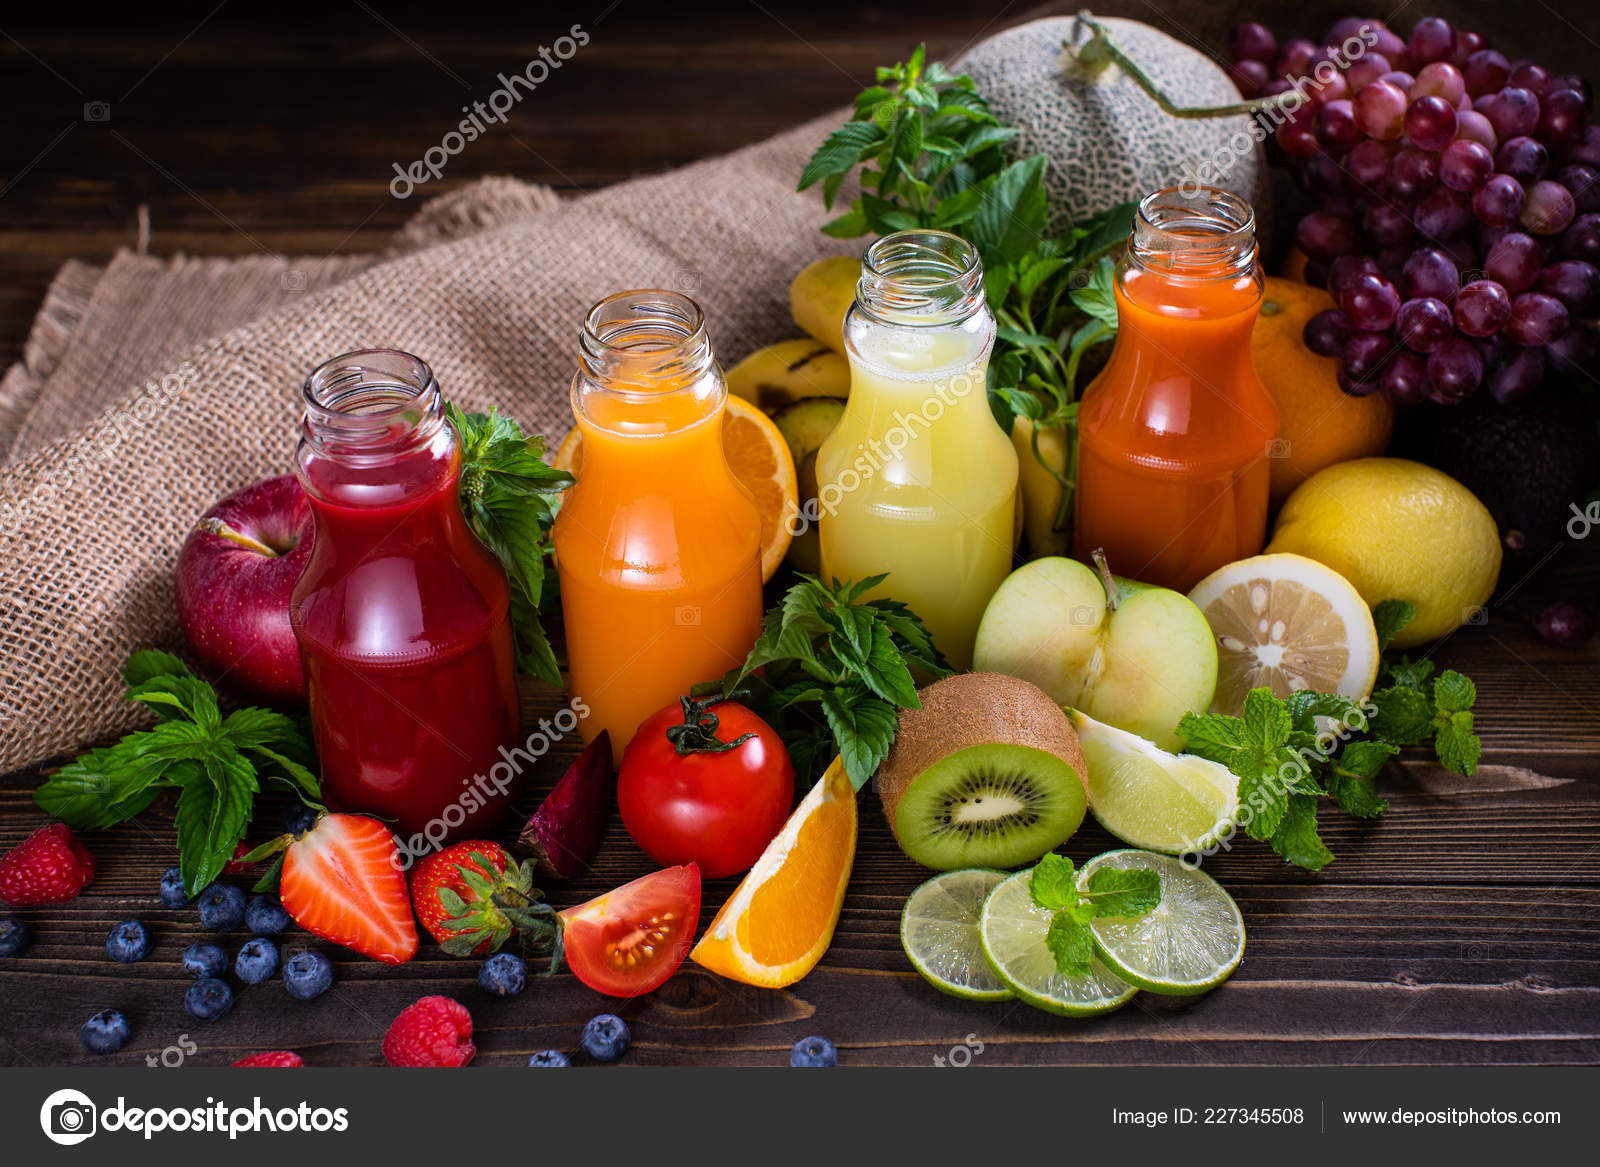 31 juillet  2020 - Page 6 Depositphotos_227345508-stock-photo-set-colorfull-fresh-vegetables-fruits